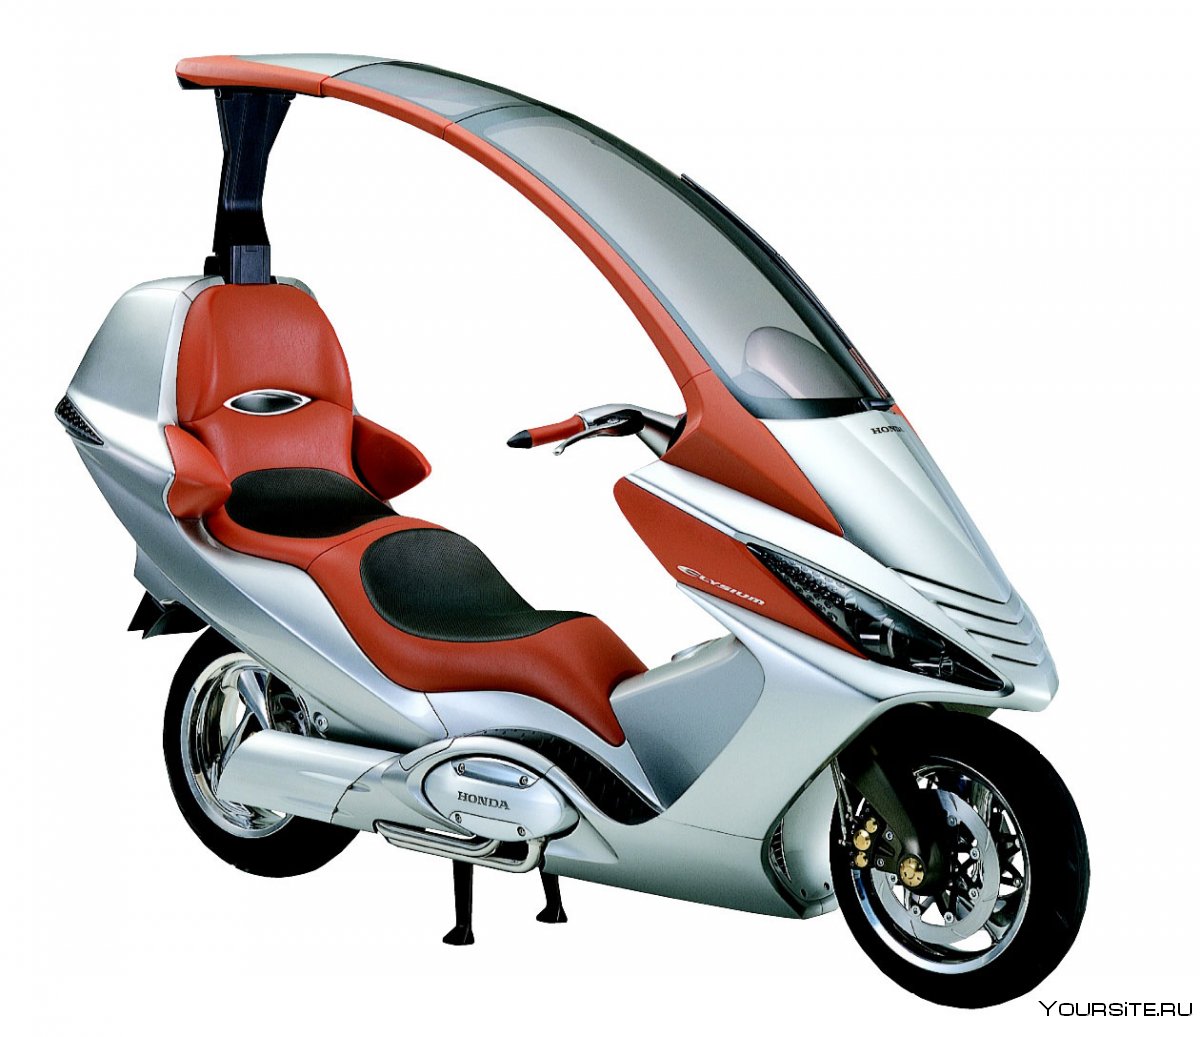 Honda's Elysium скутер с крышей